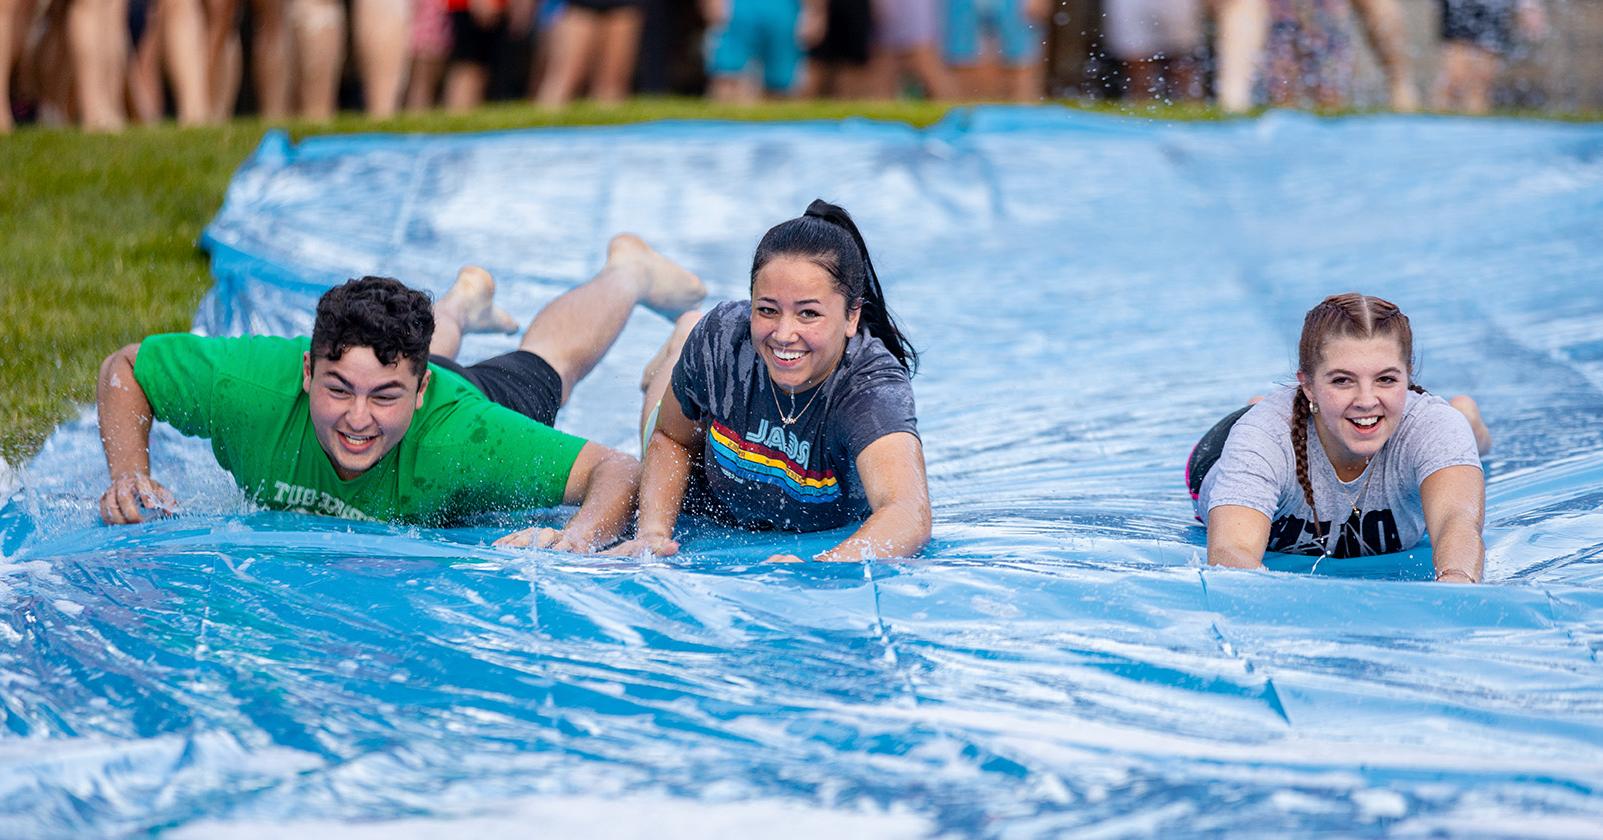 Students enjoy welcome weekend slip-and-slide